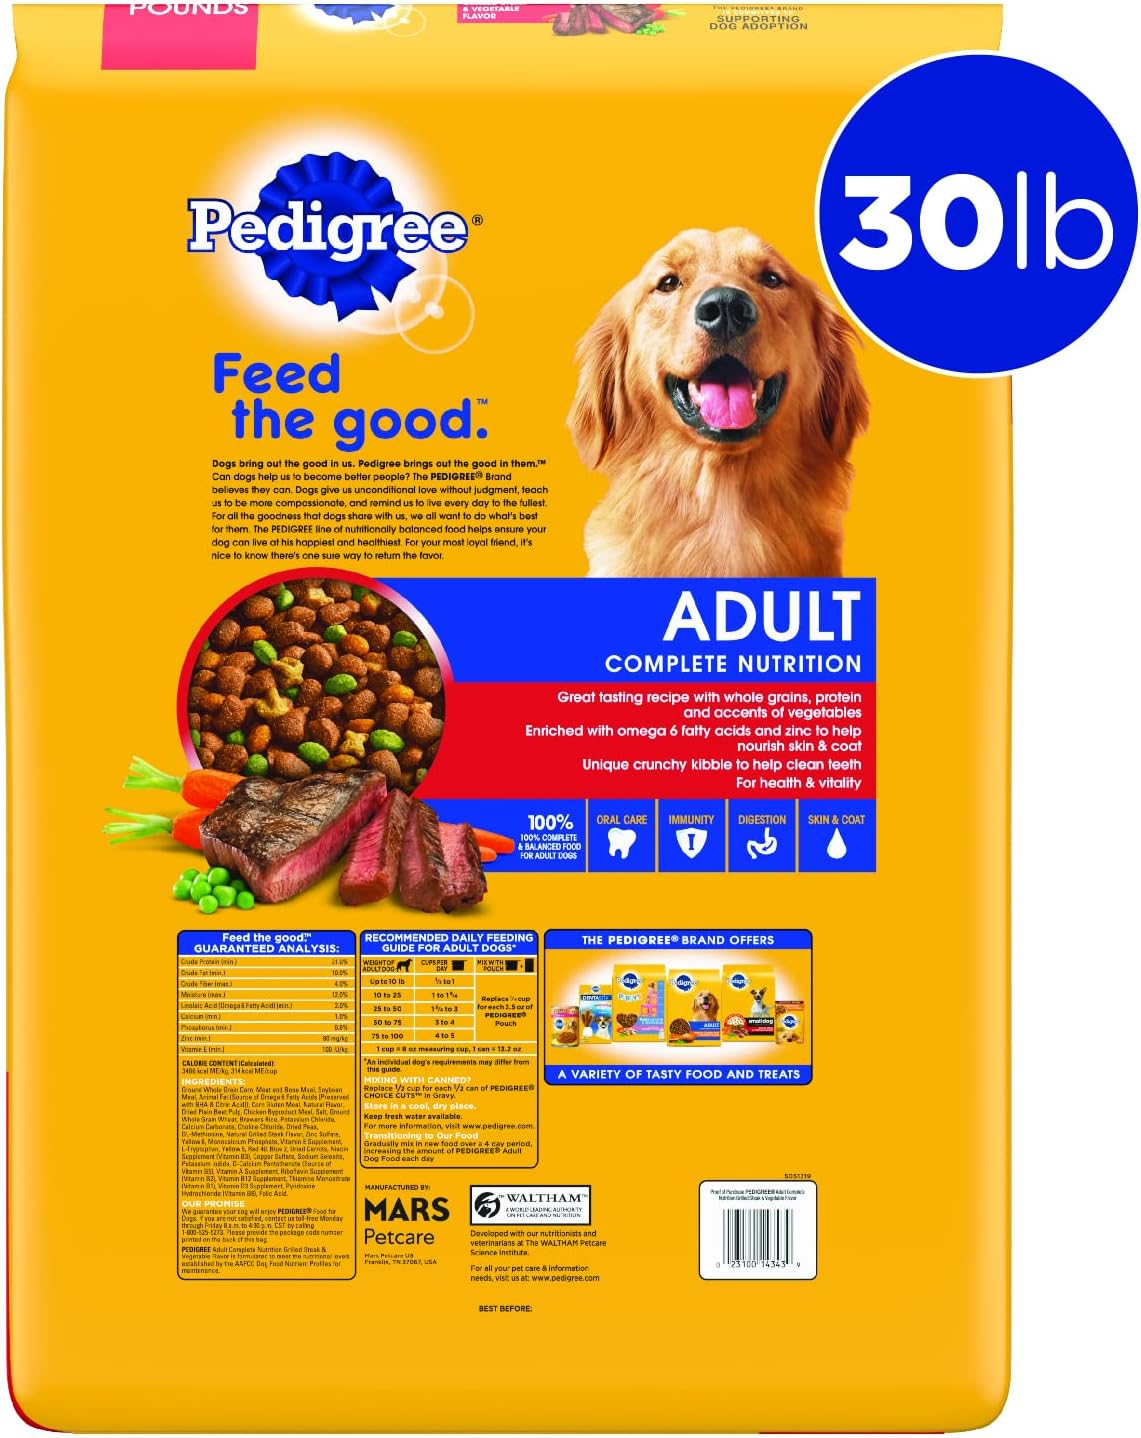 Wholesale prices with free shipping all over United States Pedigree Complete Nutrition Adult Dry Dog Food Grilled Steak & Vegetable Flavor Dog Kibble, 30 lb. Bag - Steven Deals